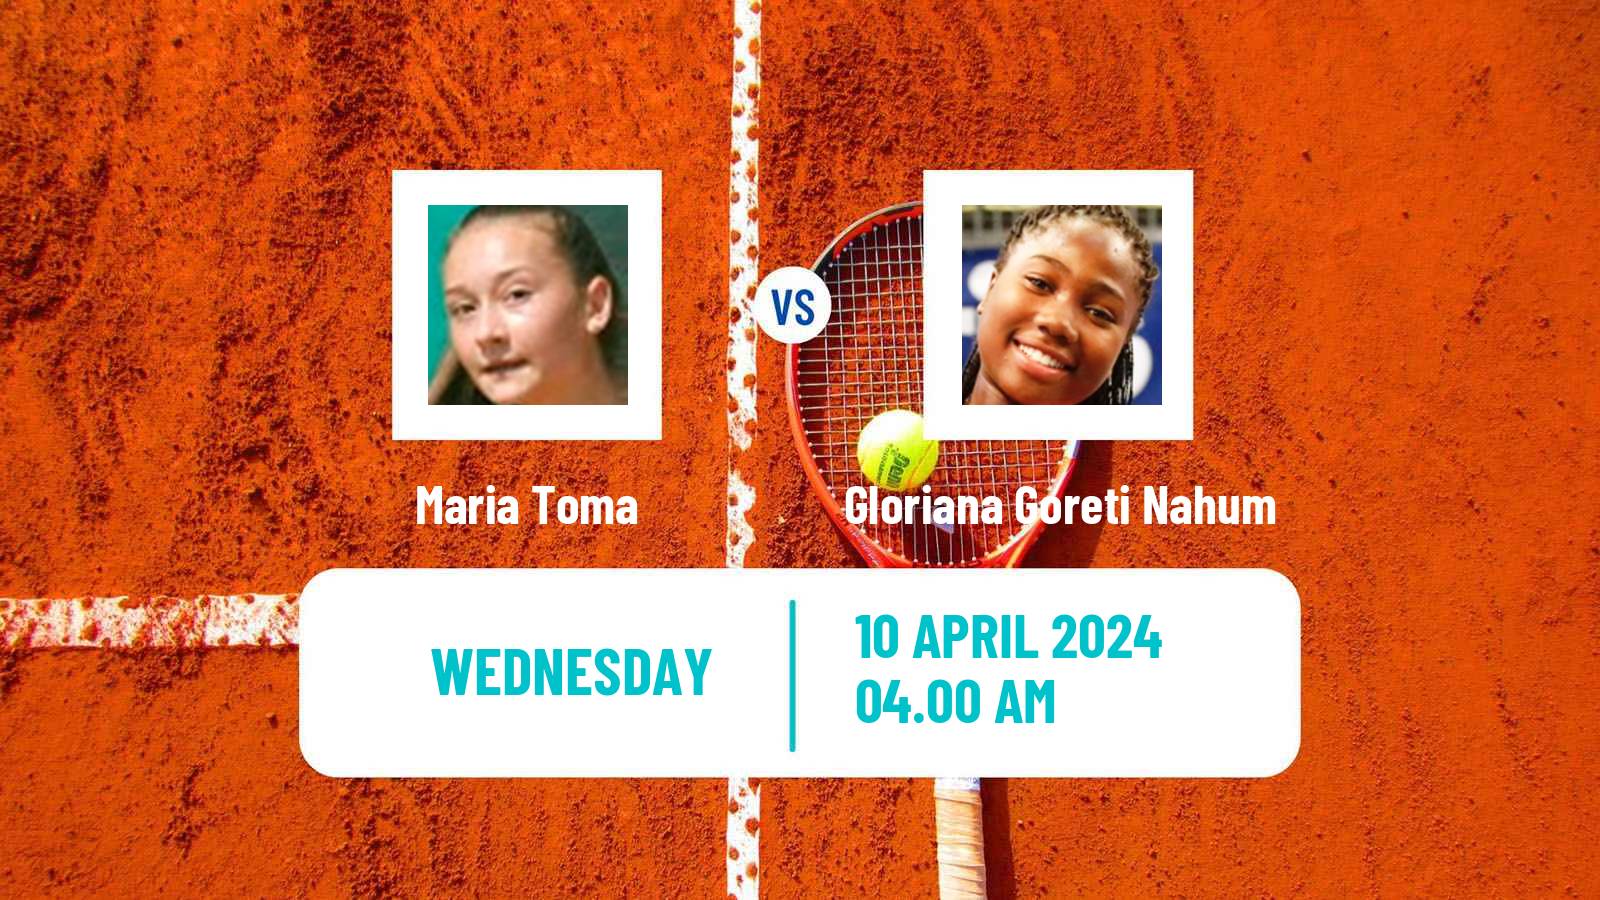 Tennis ITF W15 Telde 2 Women Maria Toma - Gloriana Goreti Nahum